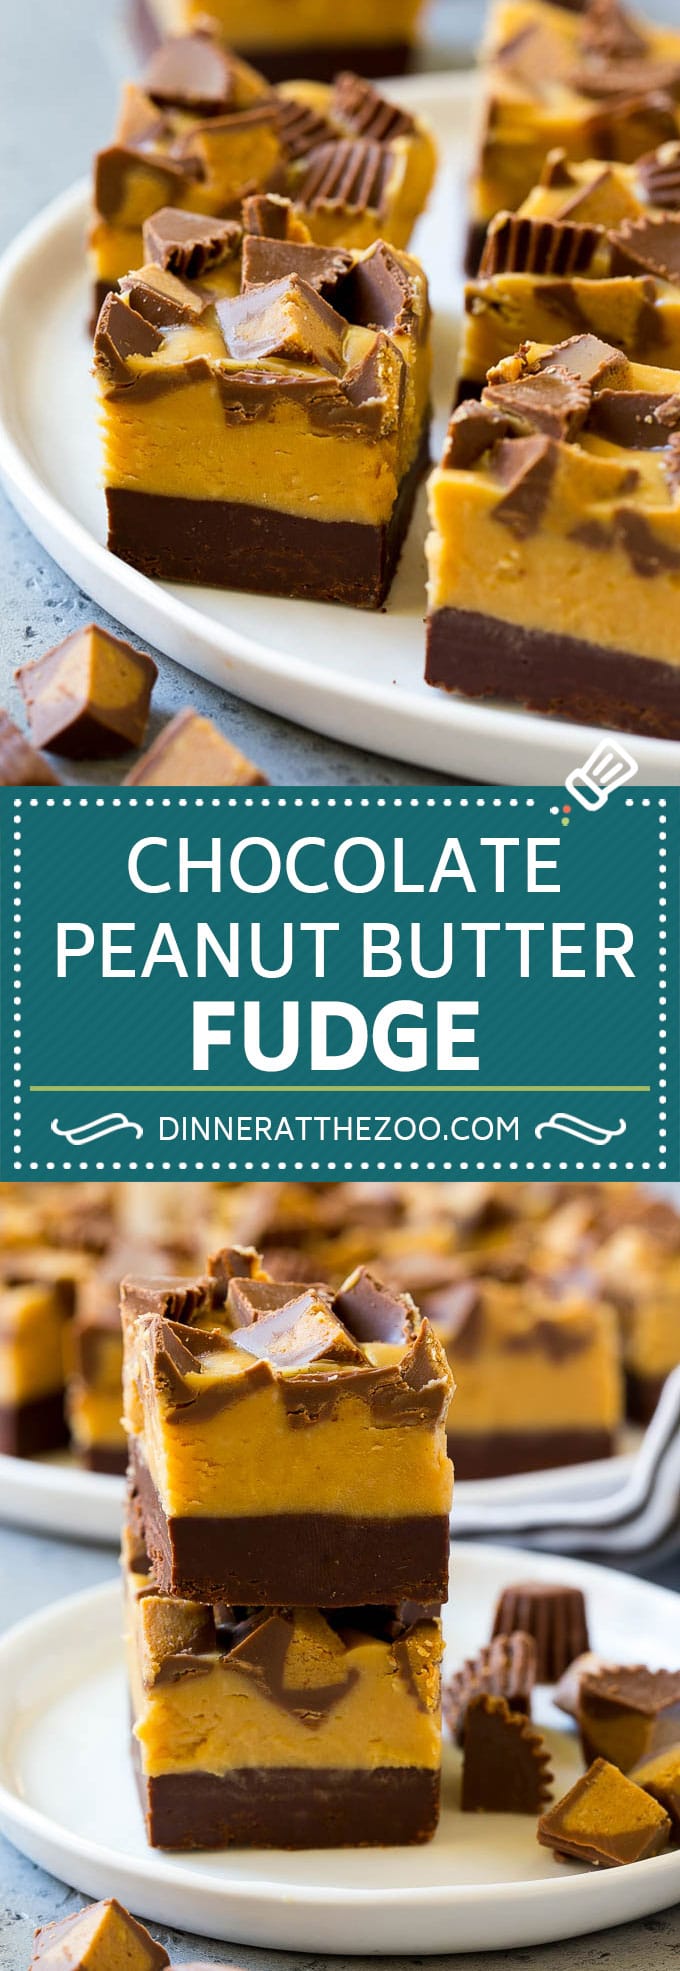 Chocolate Peanut Butter Fudge Recipe | Peanut Butter Cup Fudge | Easy Fudge Recipe #chocolate #peanutbutter #fudge #baking #dessert #dinneratthezoo